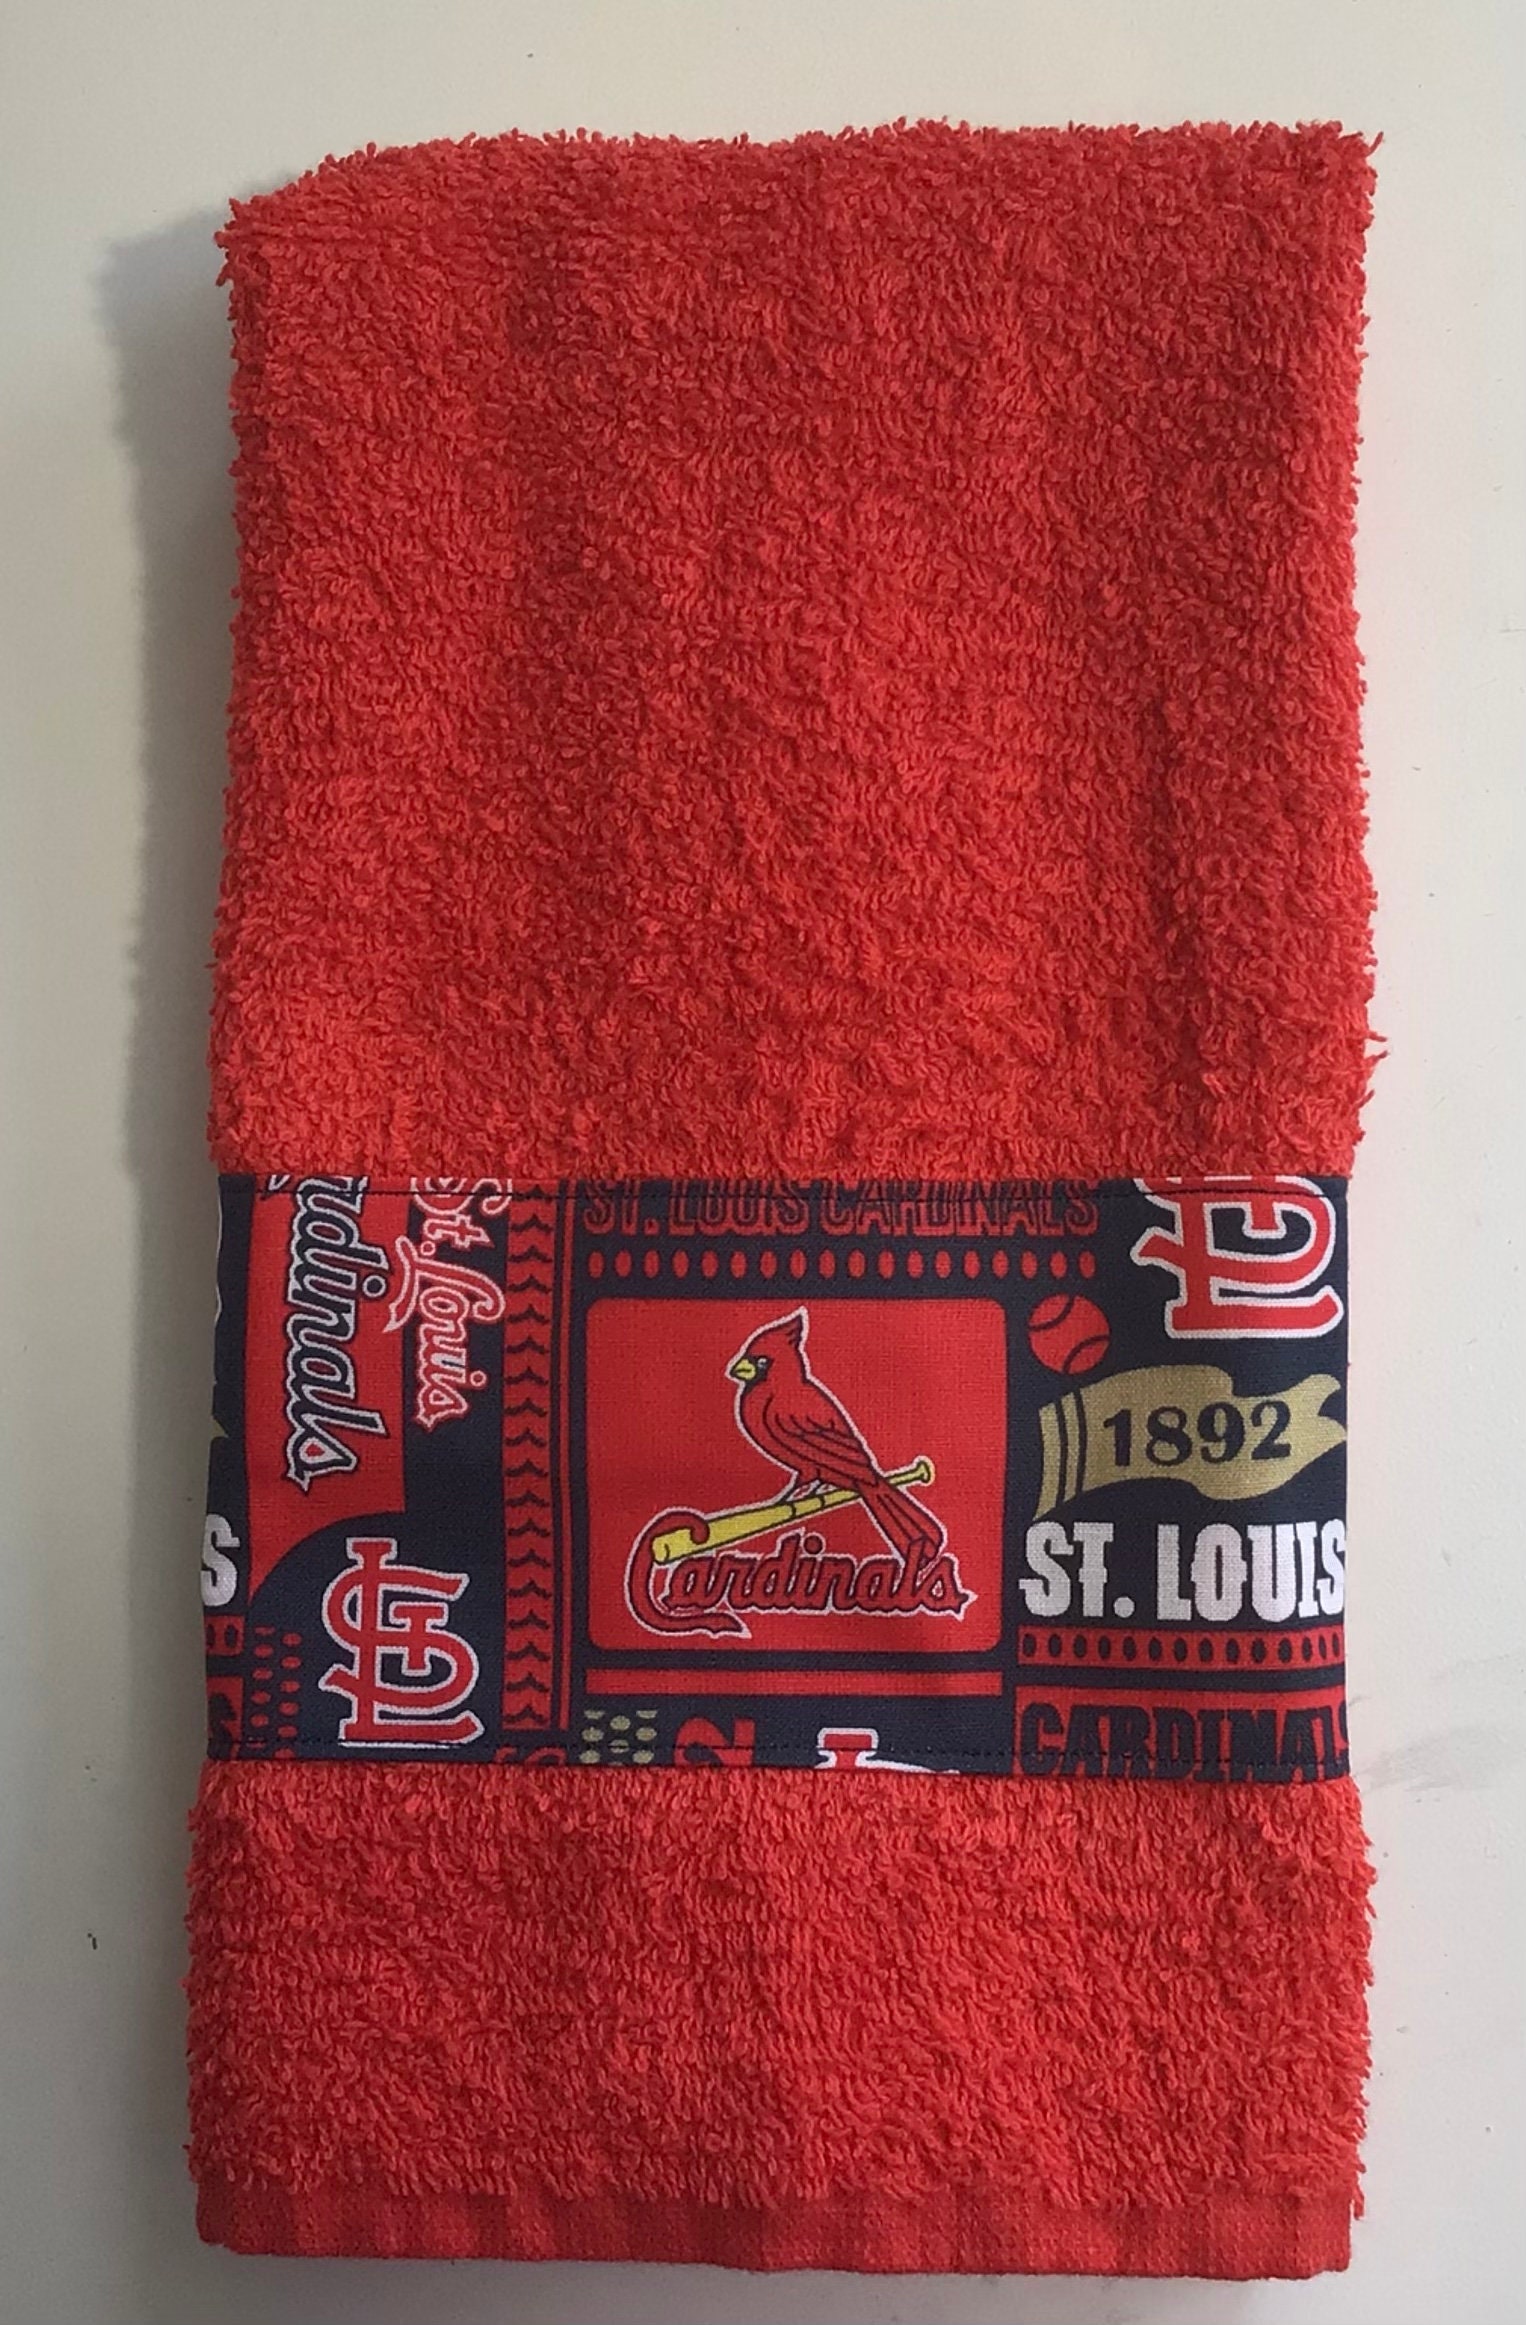 St. Louis Cardinals 16'' x 40'' Microfiber Golf Towel - Red